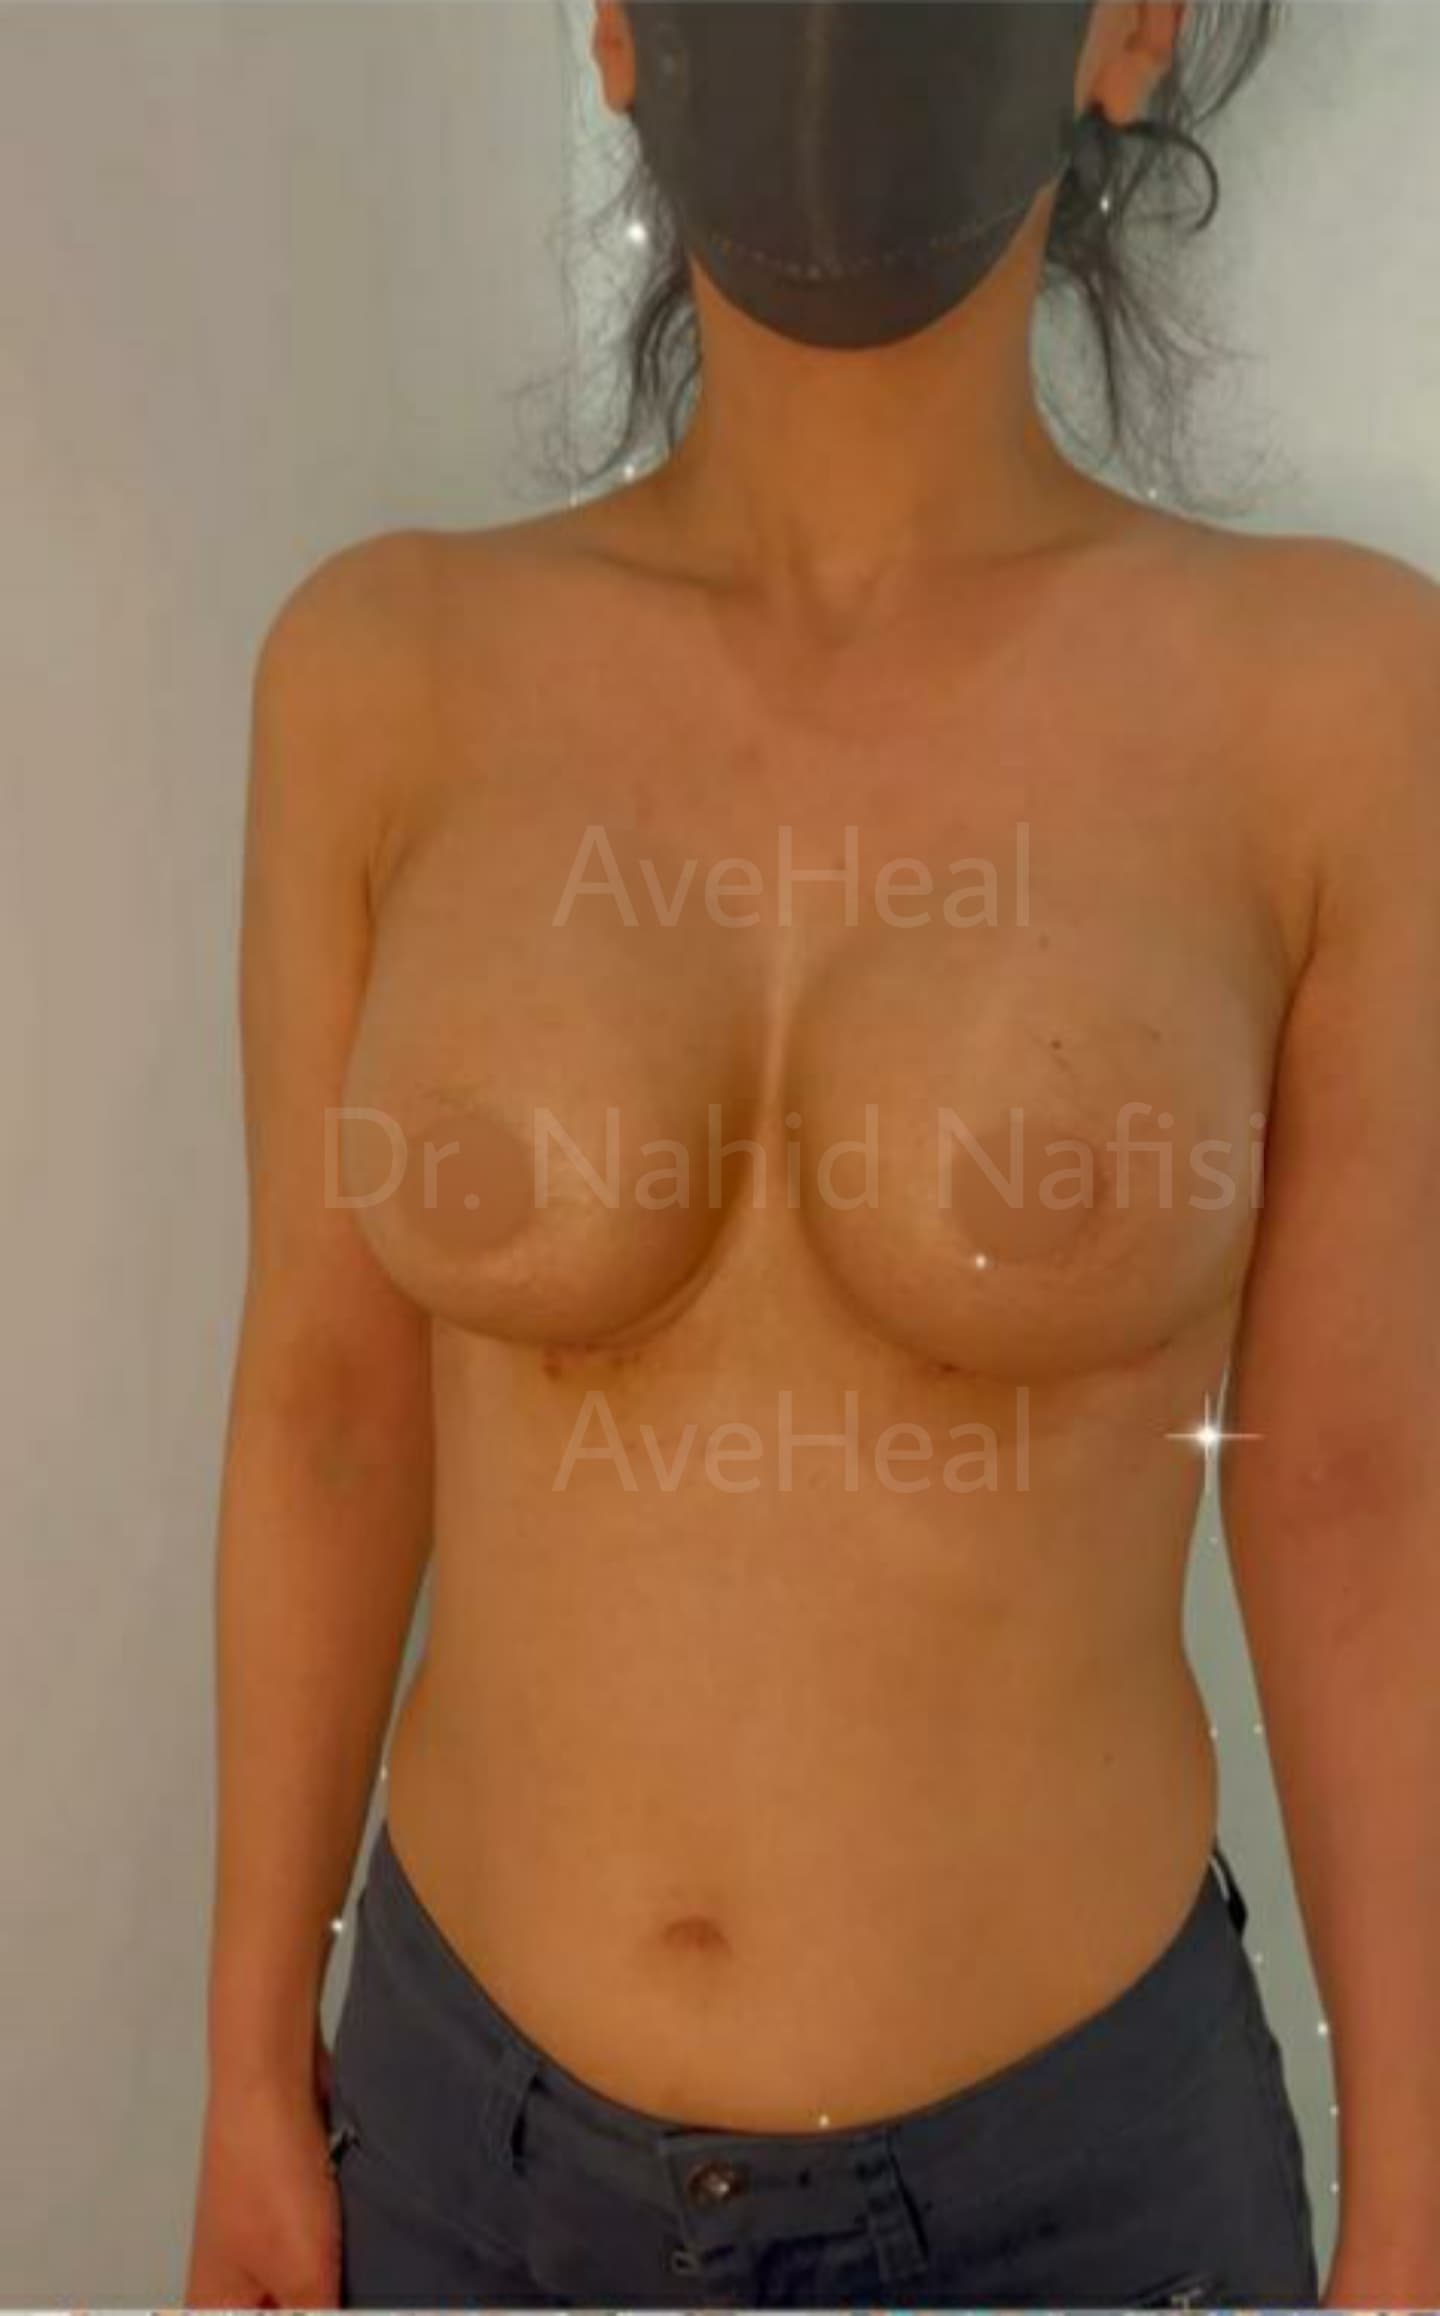 after-breast-augmentation-dr-nahid-nafisi